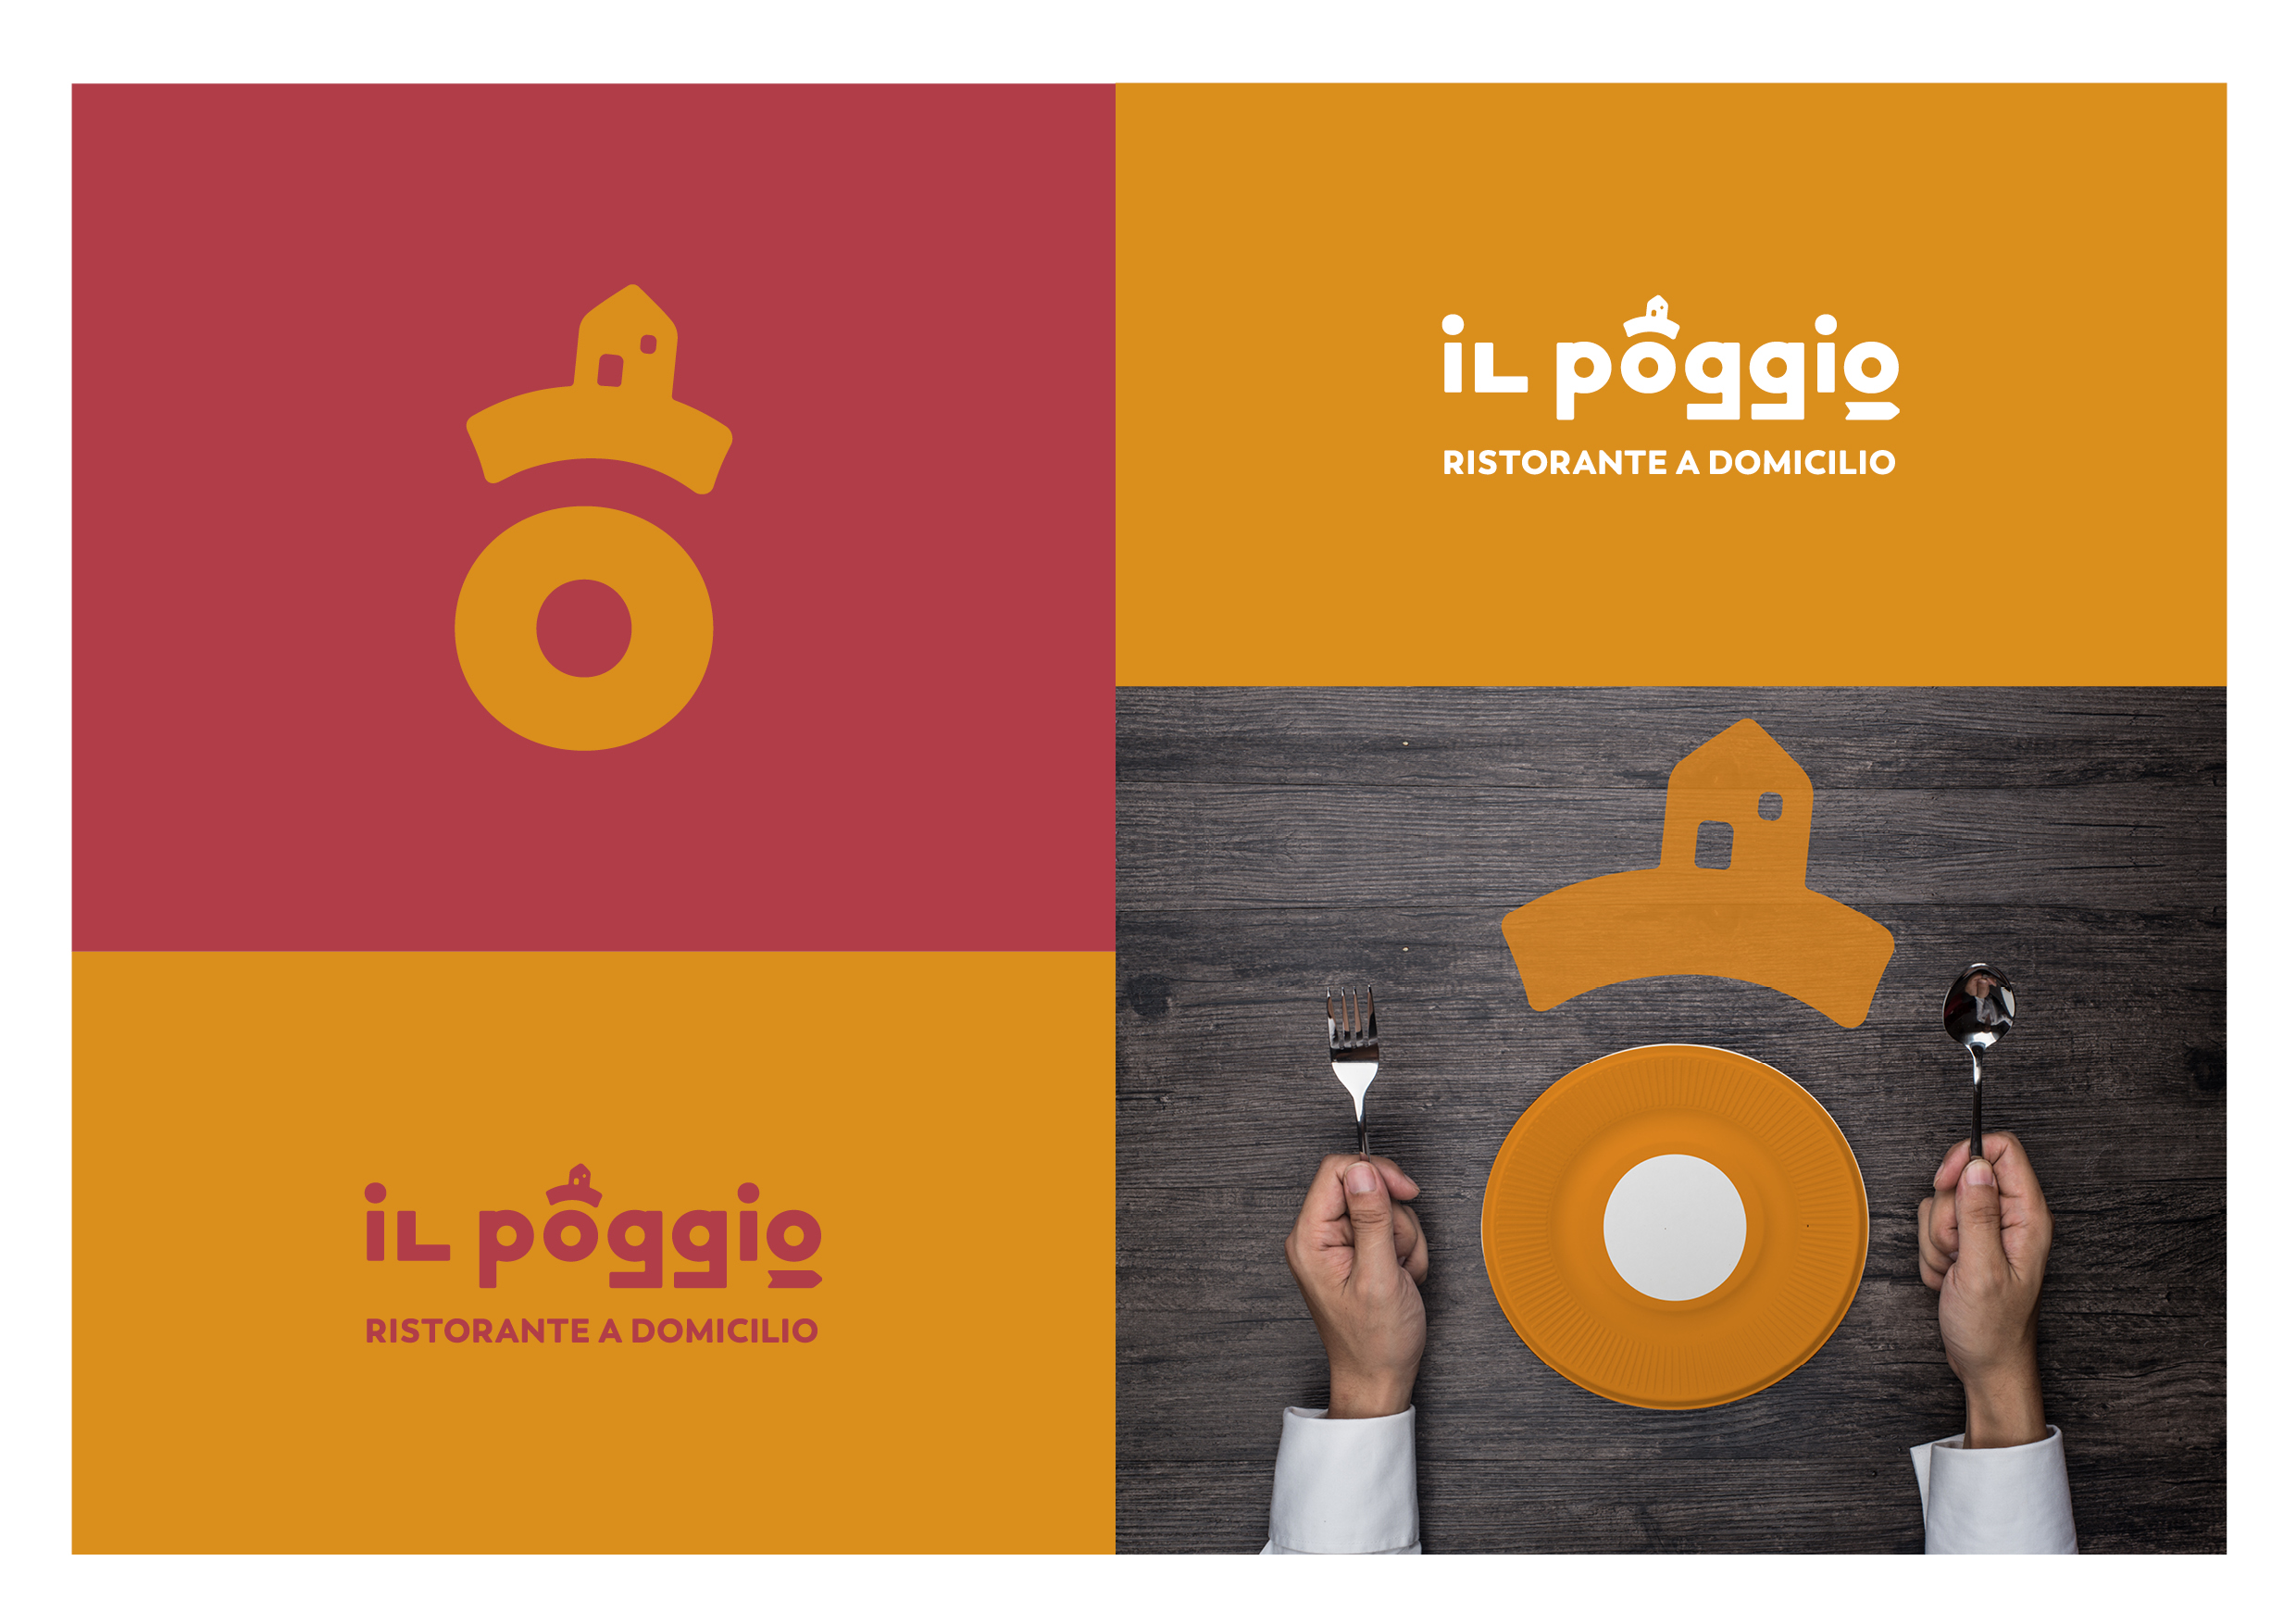 Il Poggio - Delivery Restaurant by Nicola Sancisi - Creative Work